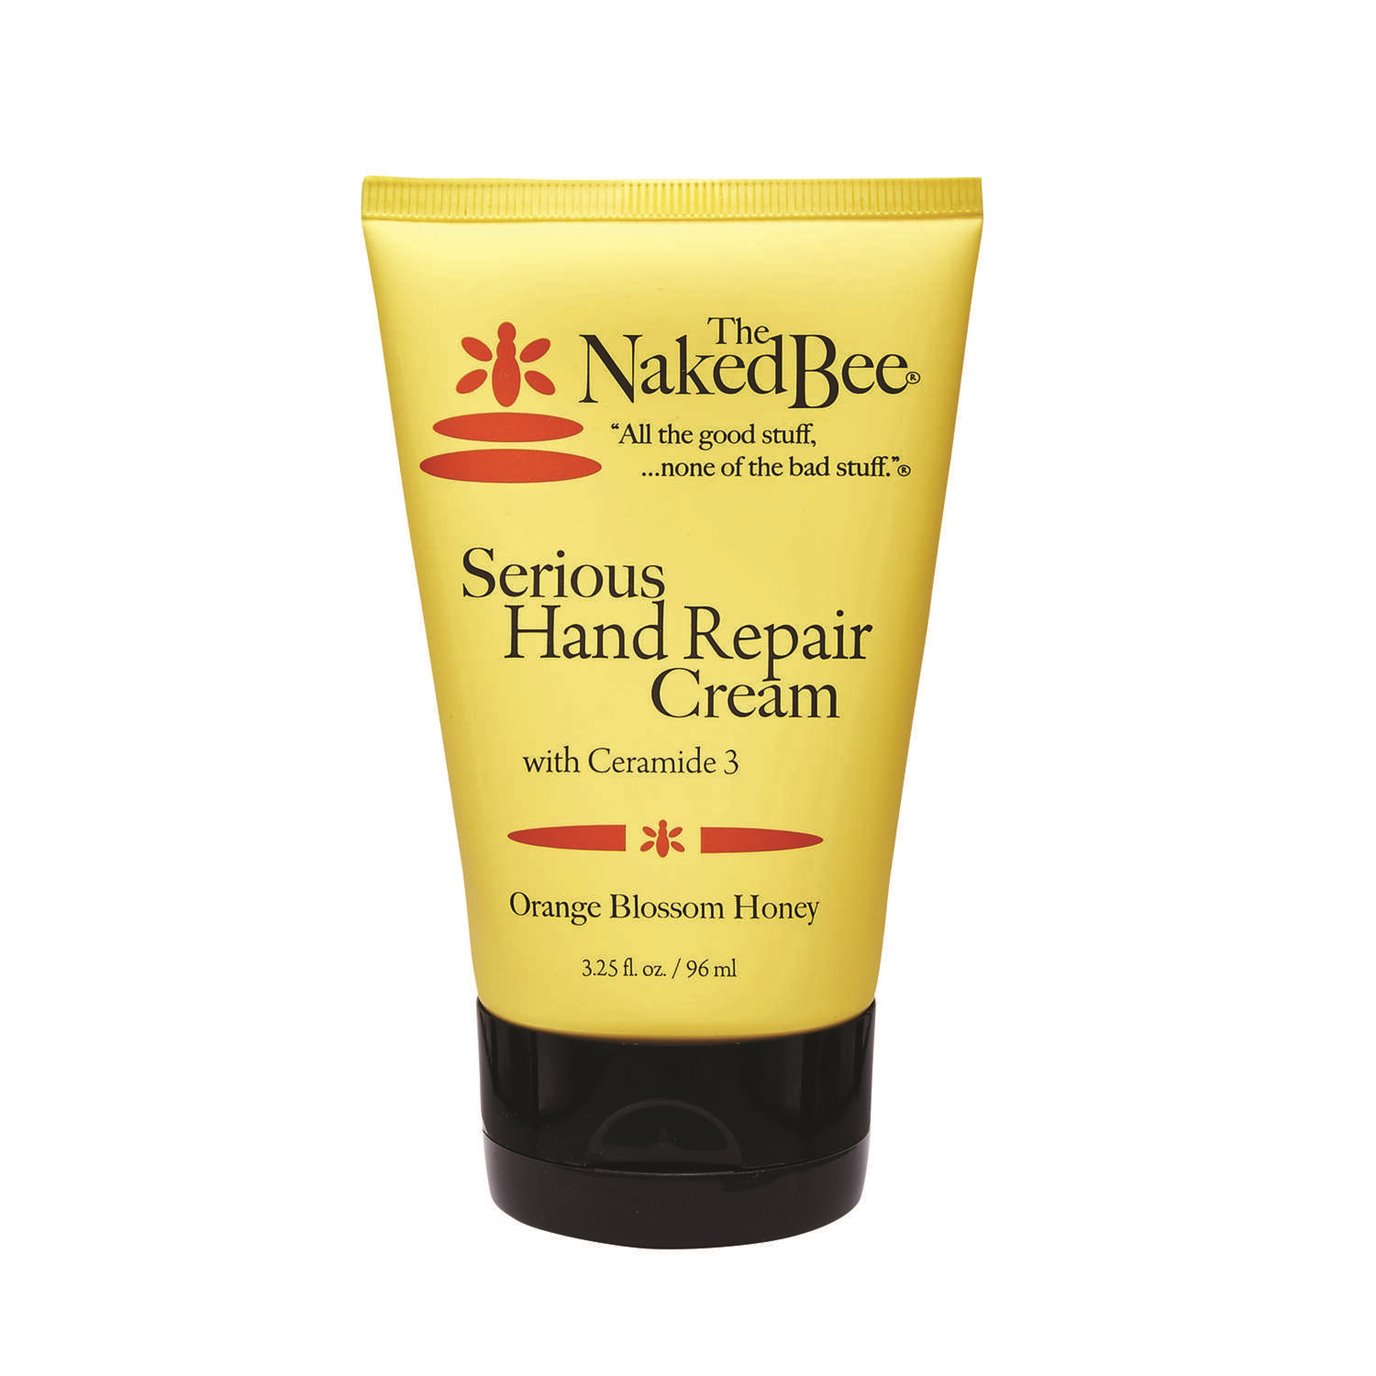 Naked Bee Orange Blossom Honey Serious Hand Repair Cream 3.25 oz